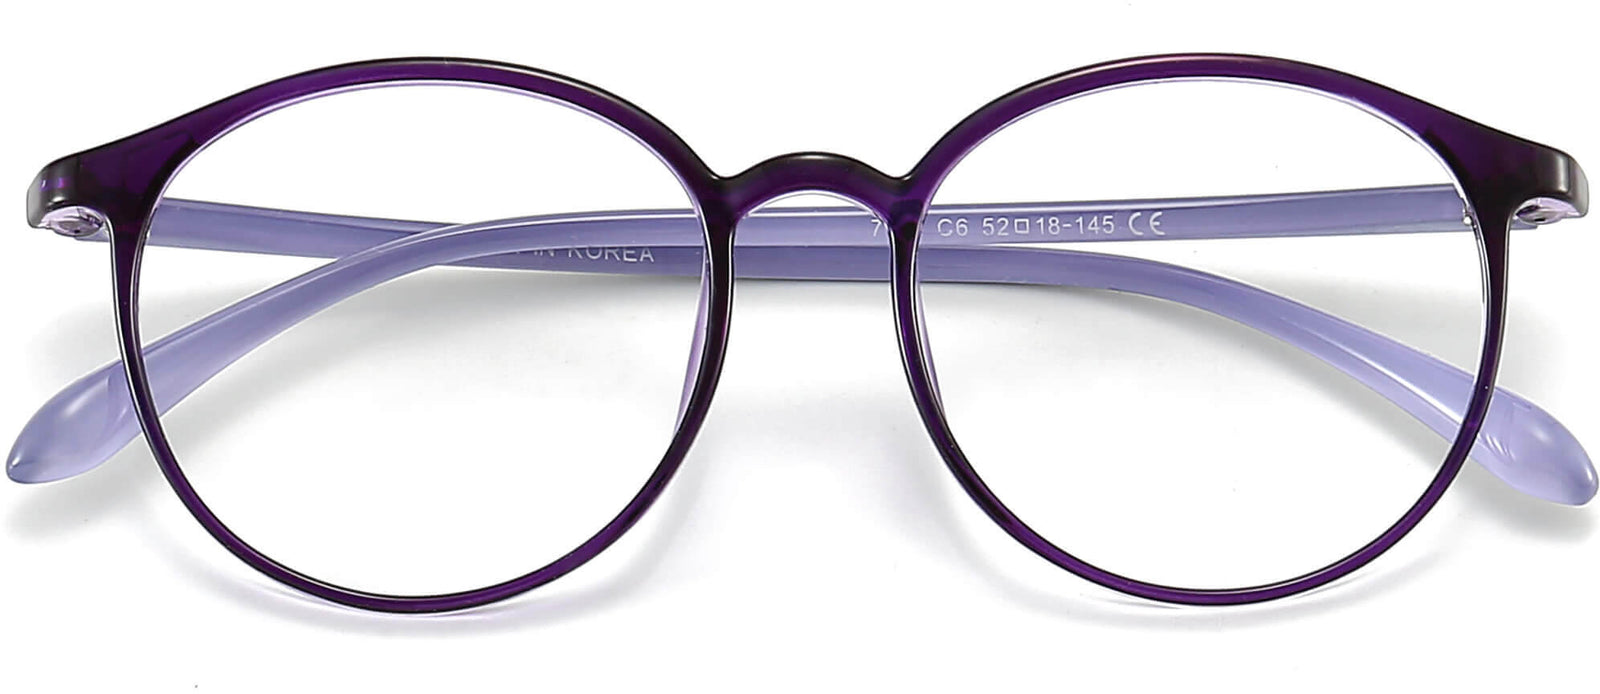 Round Shape Glasses Frames Anrri Eyewear